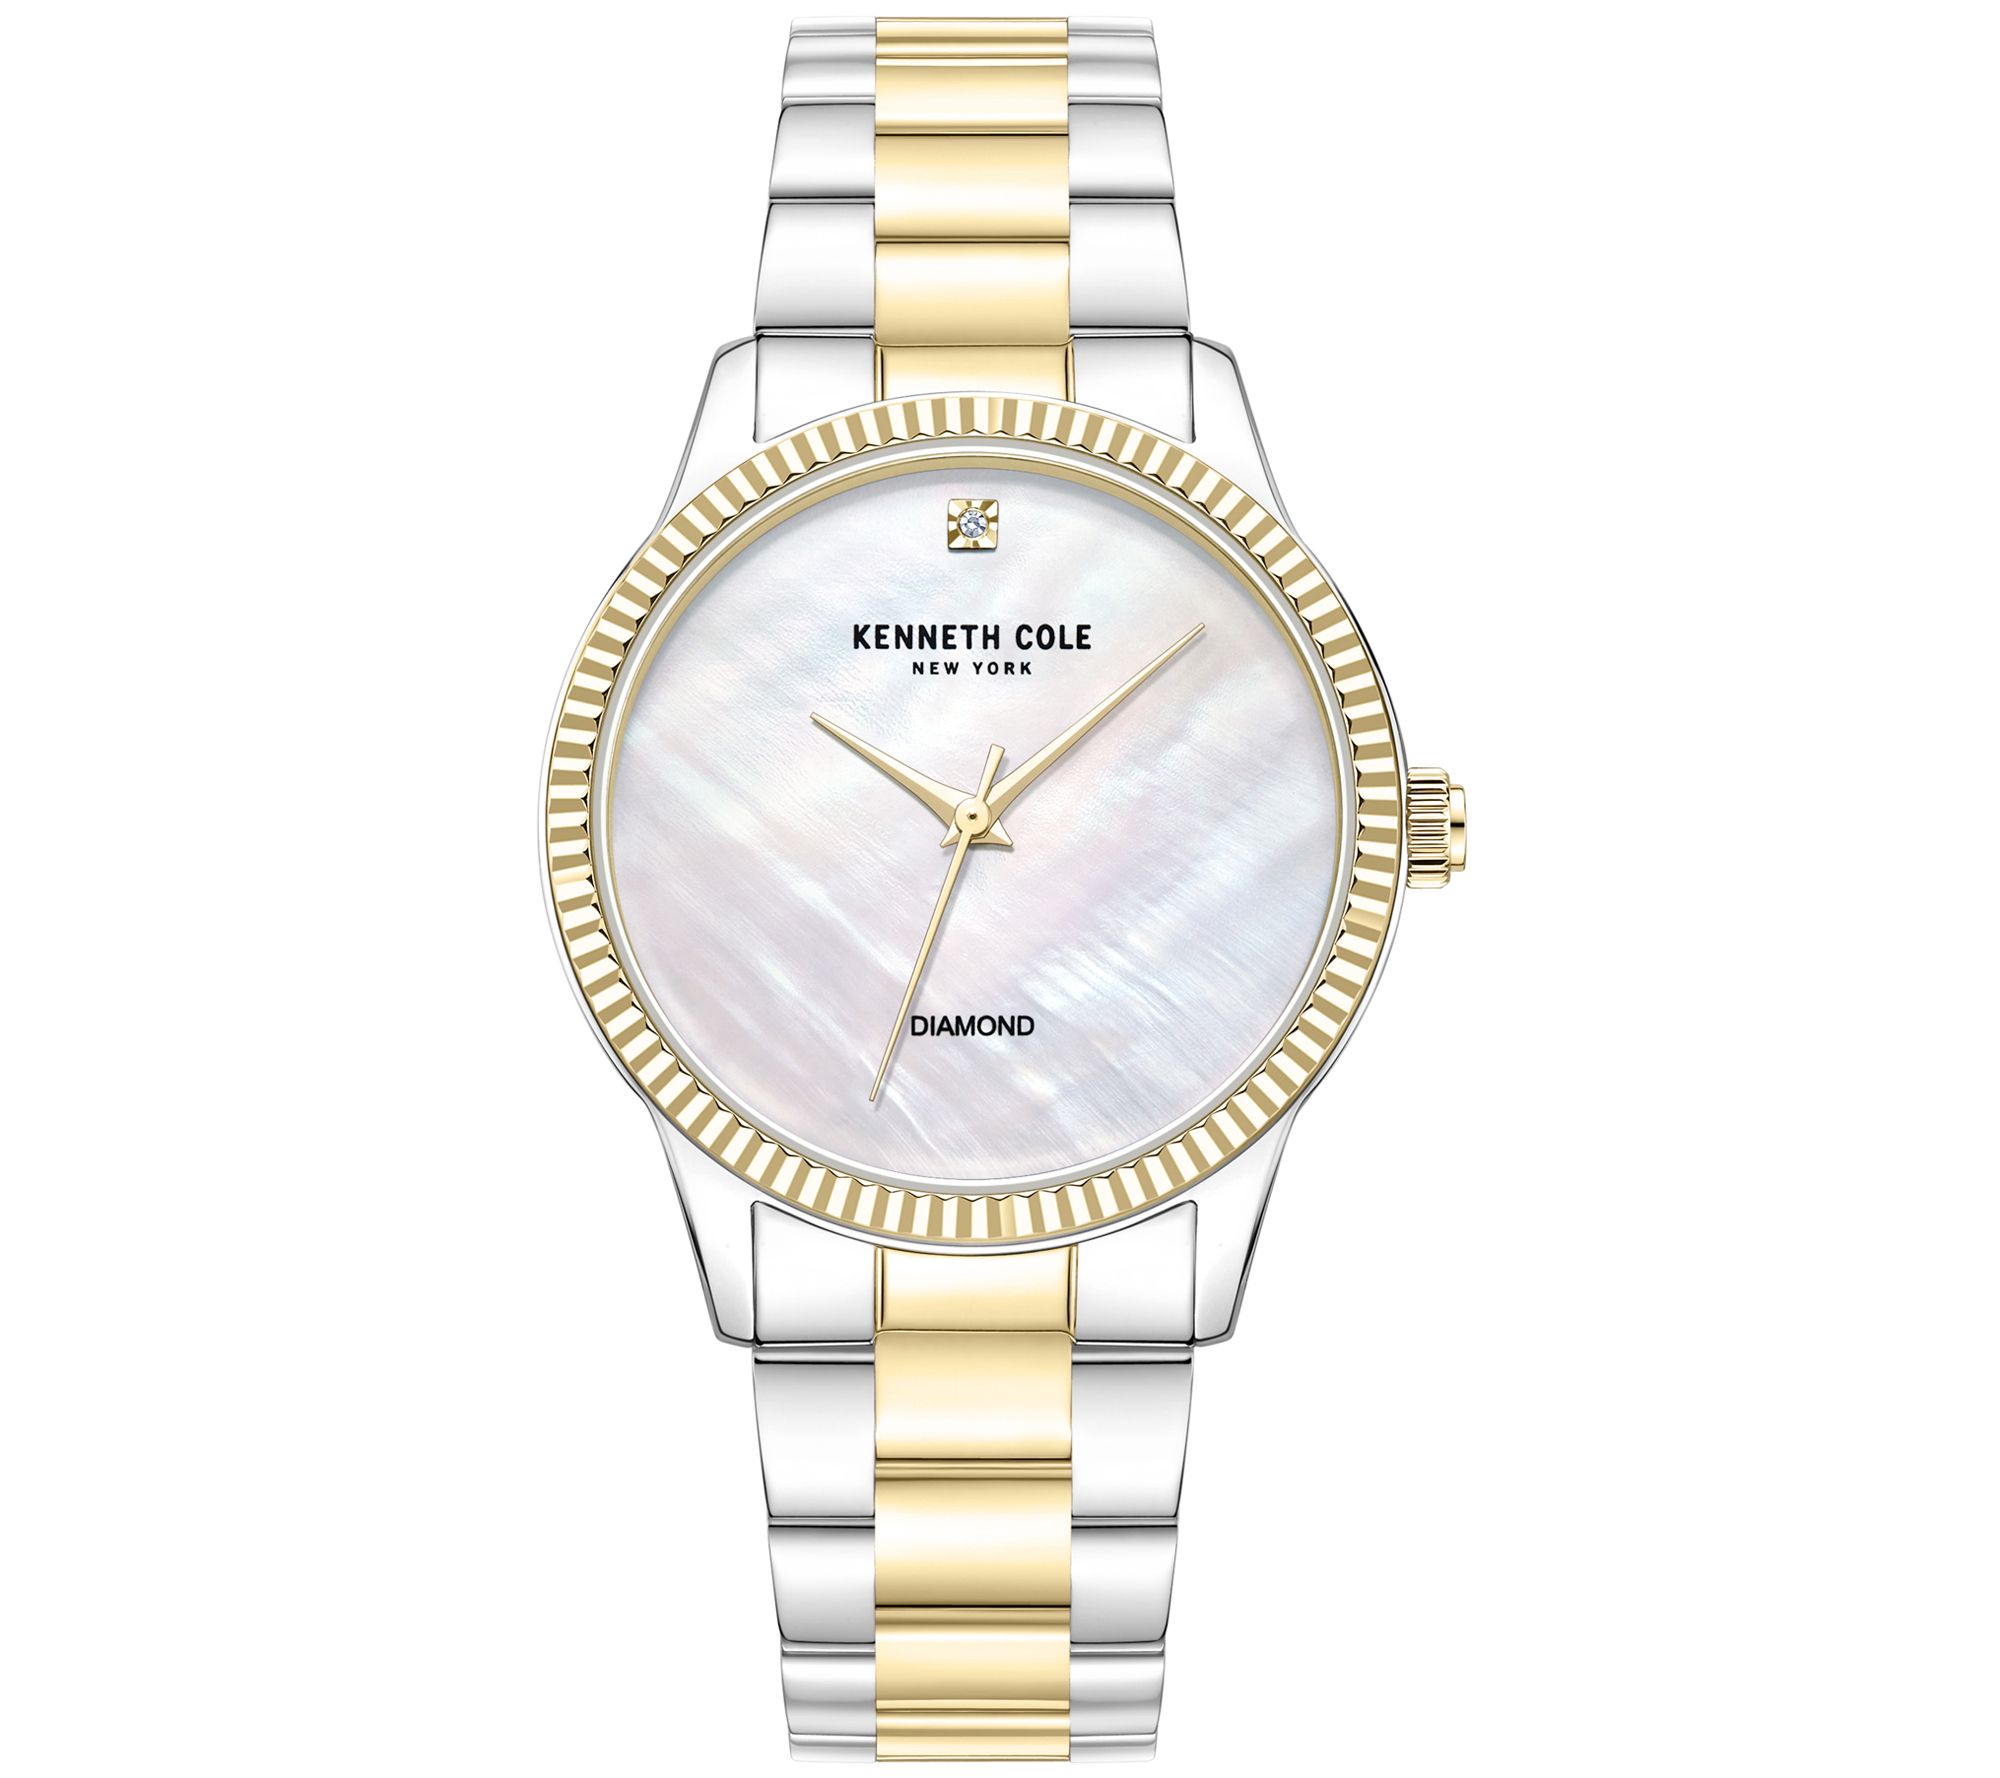 Chanel J12 Ladies White Ceramic Casing Watch 1:1 Mirror Replica Watch